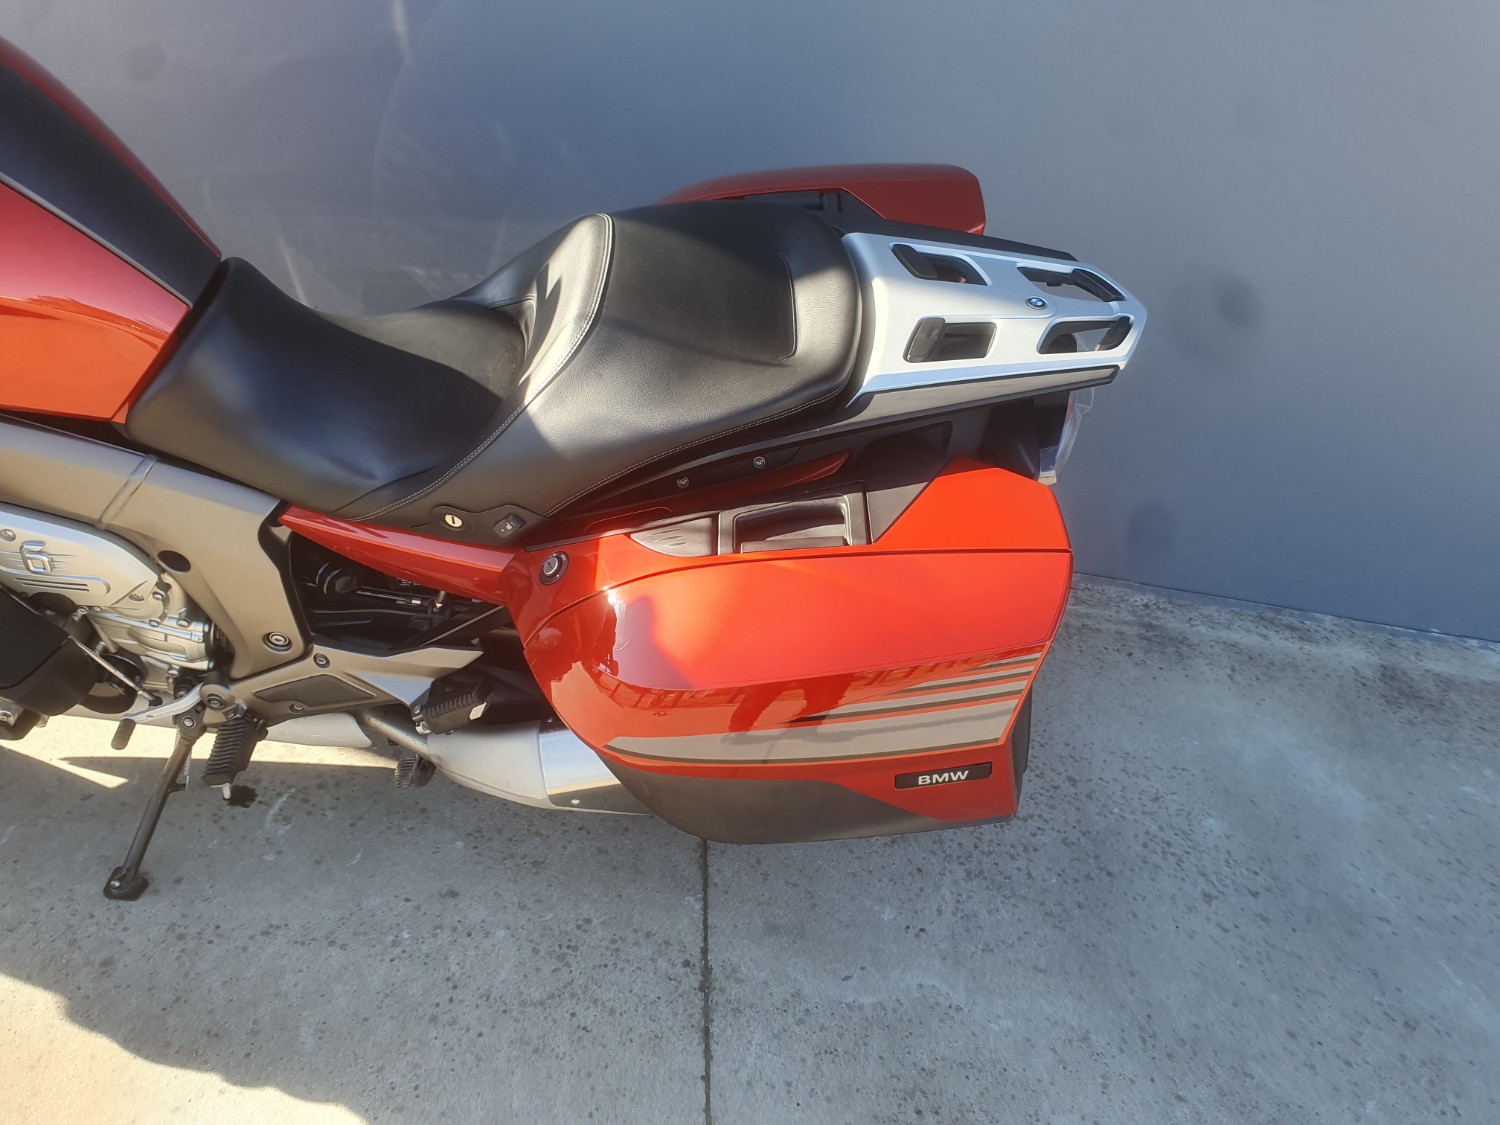 2015 BMW K 1600 GT Motorcycle Image 7